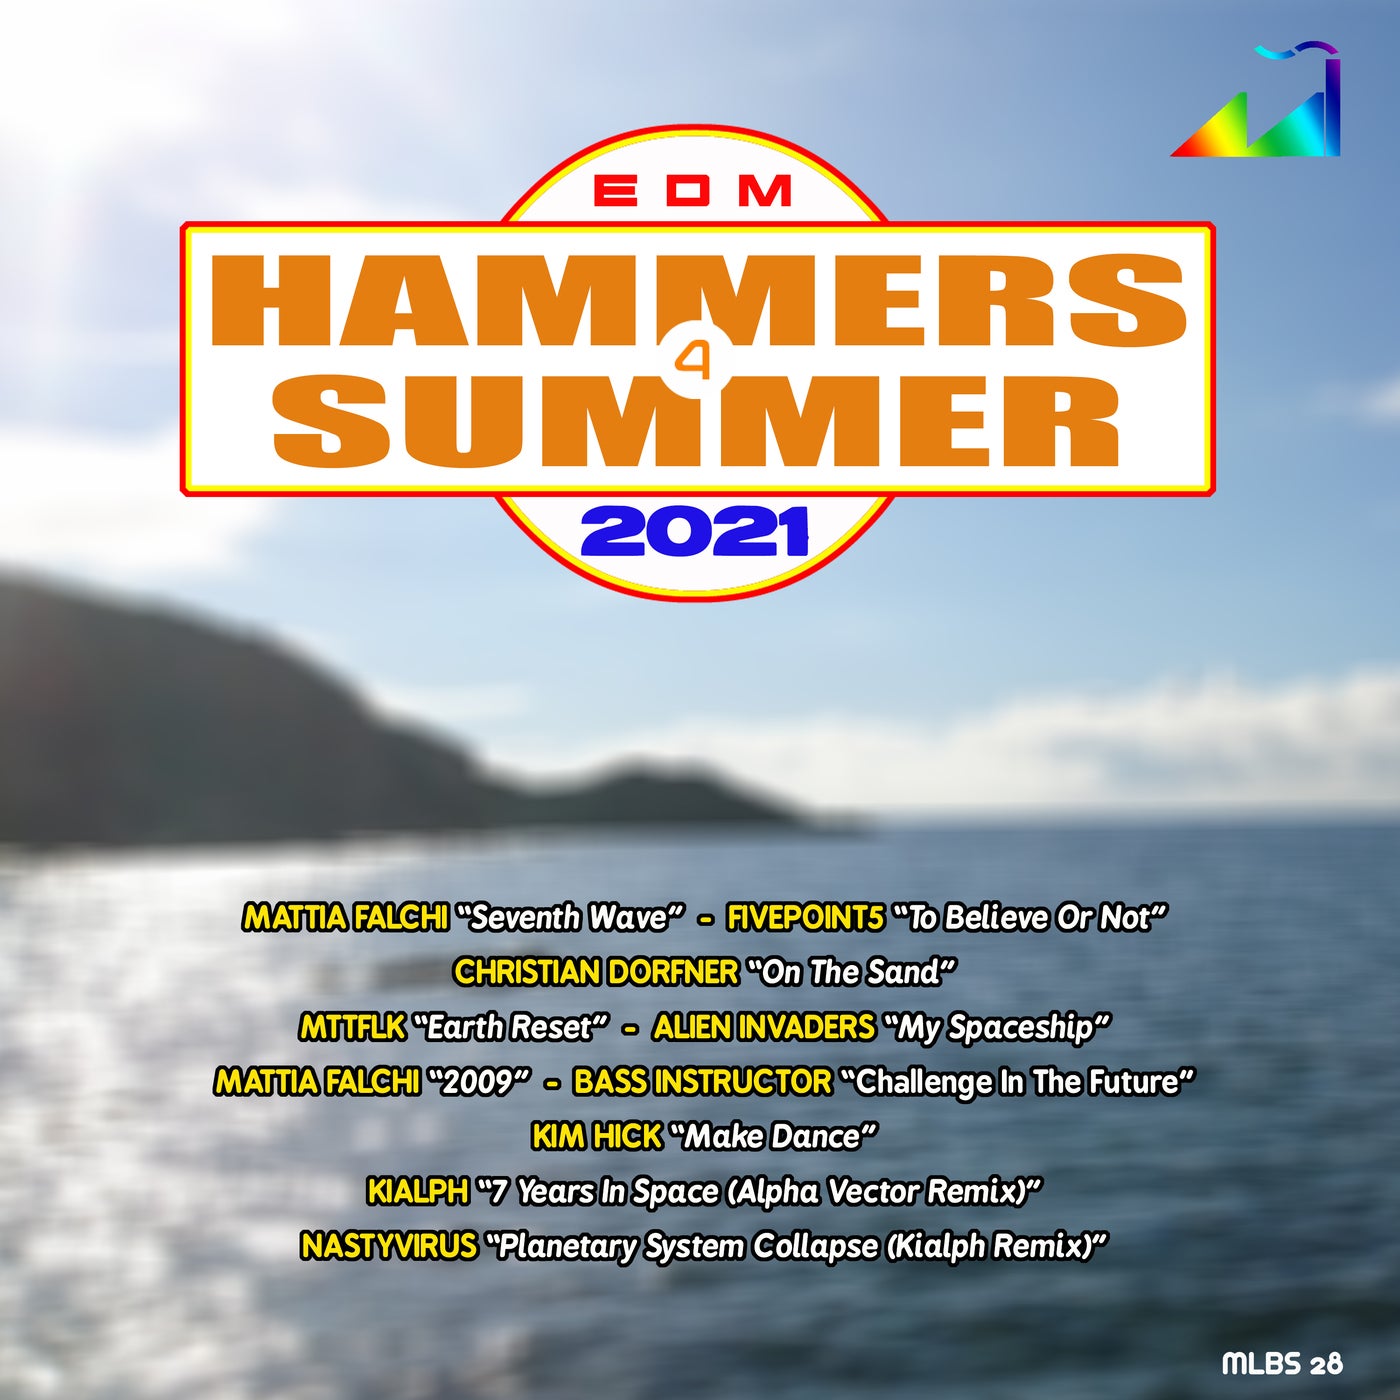 EDM HAMMERS 4 SUMMER 2021